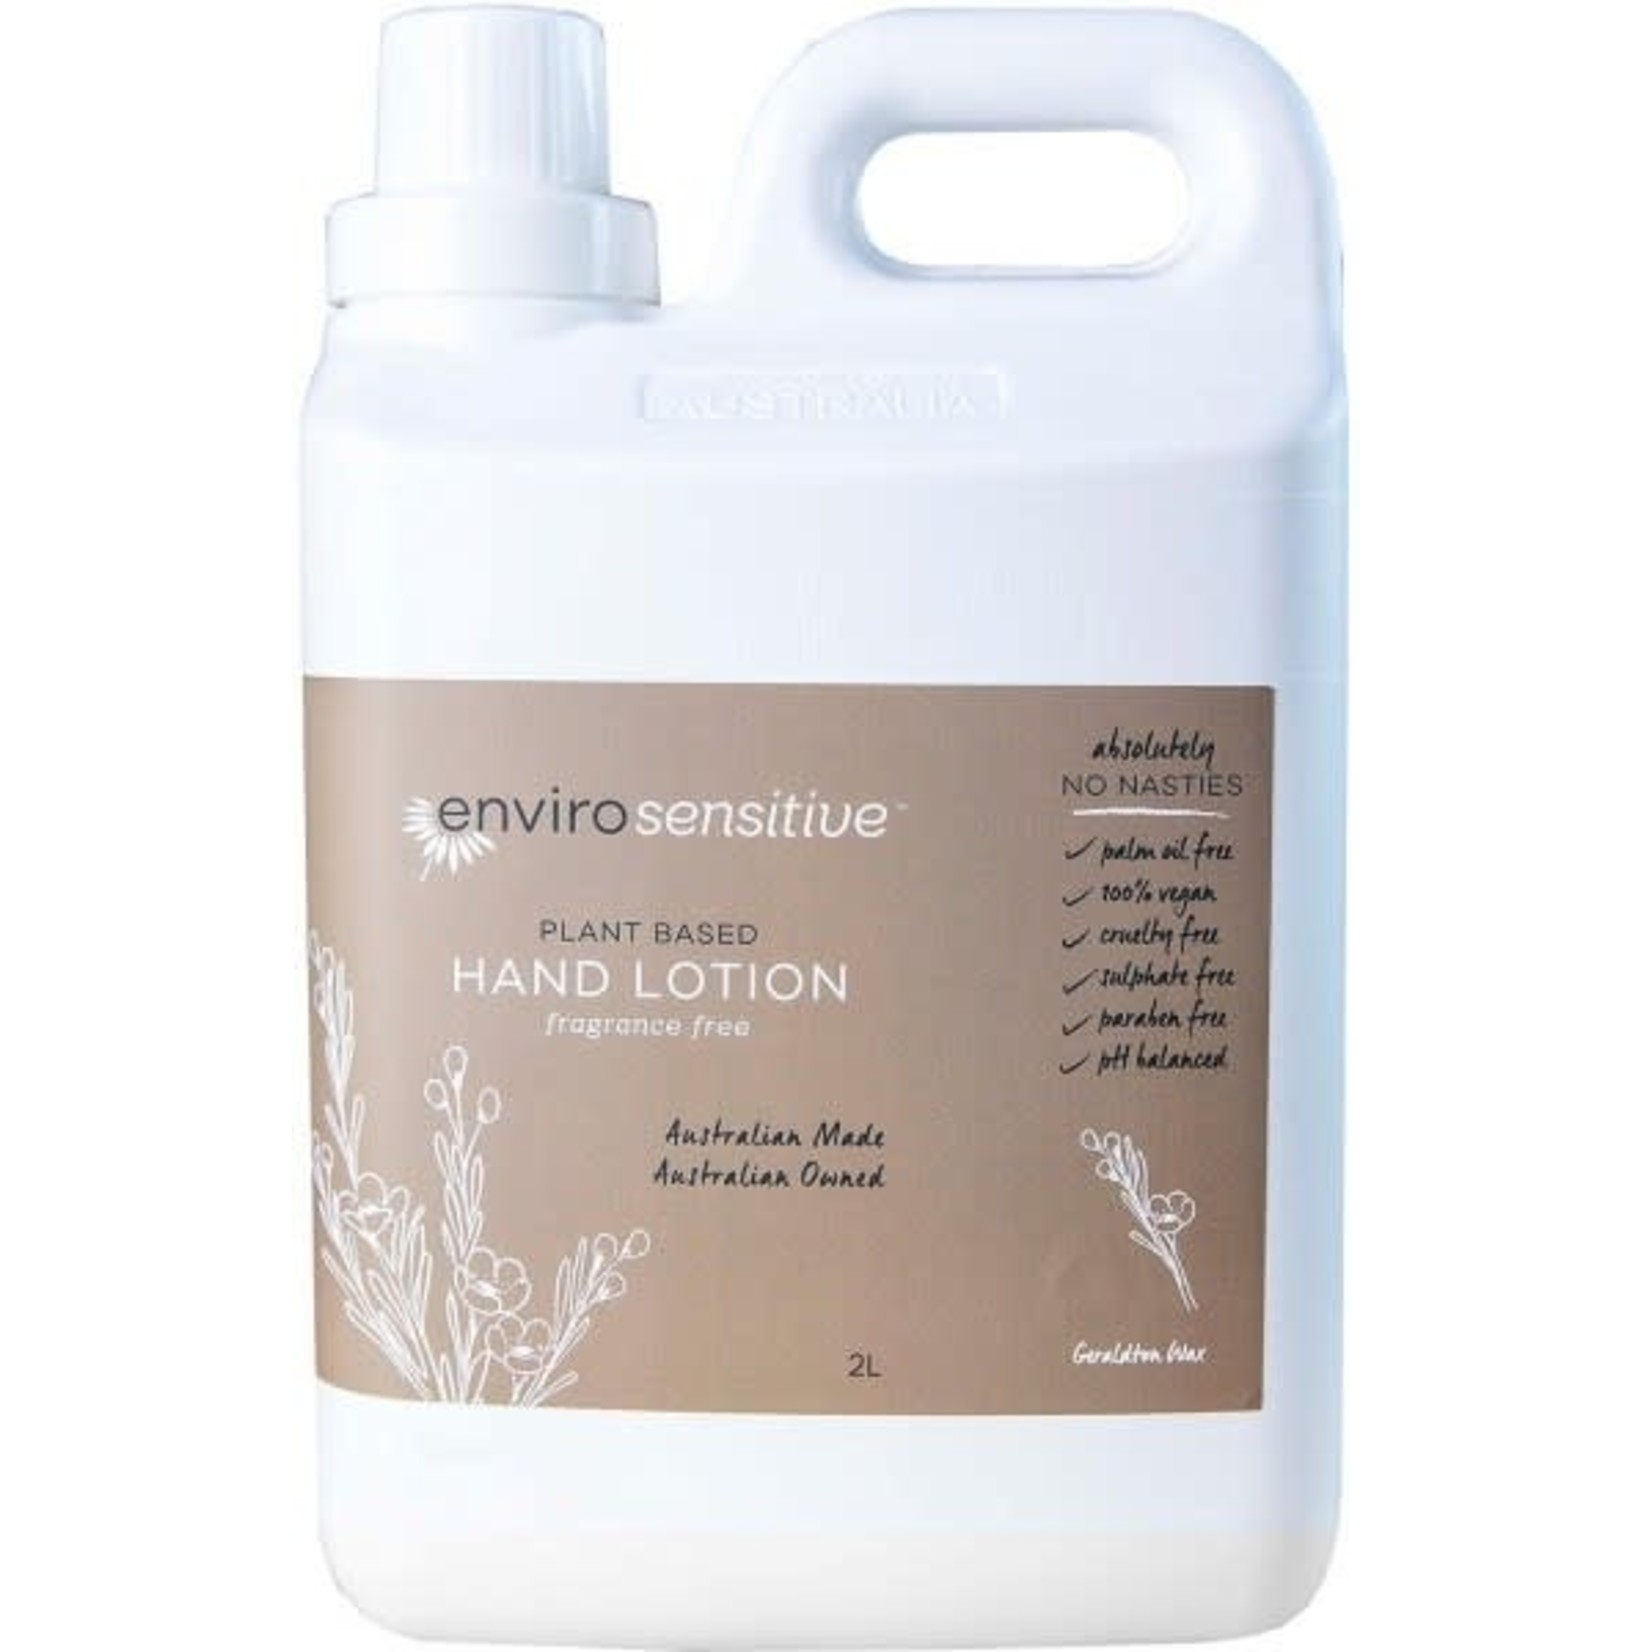 EnviroCare Enviro Sensitive Plant Based Hand Lotion Fragrance Free 2L